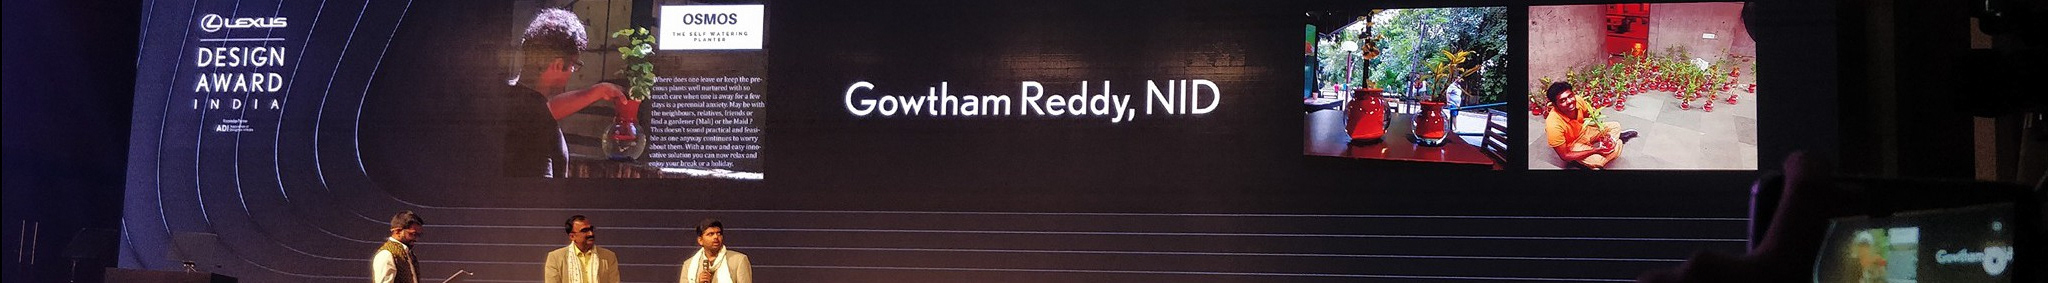 Banner de perfil de Gowtham Reddy